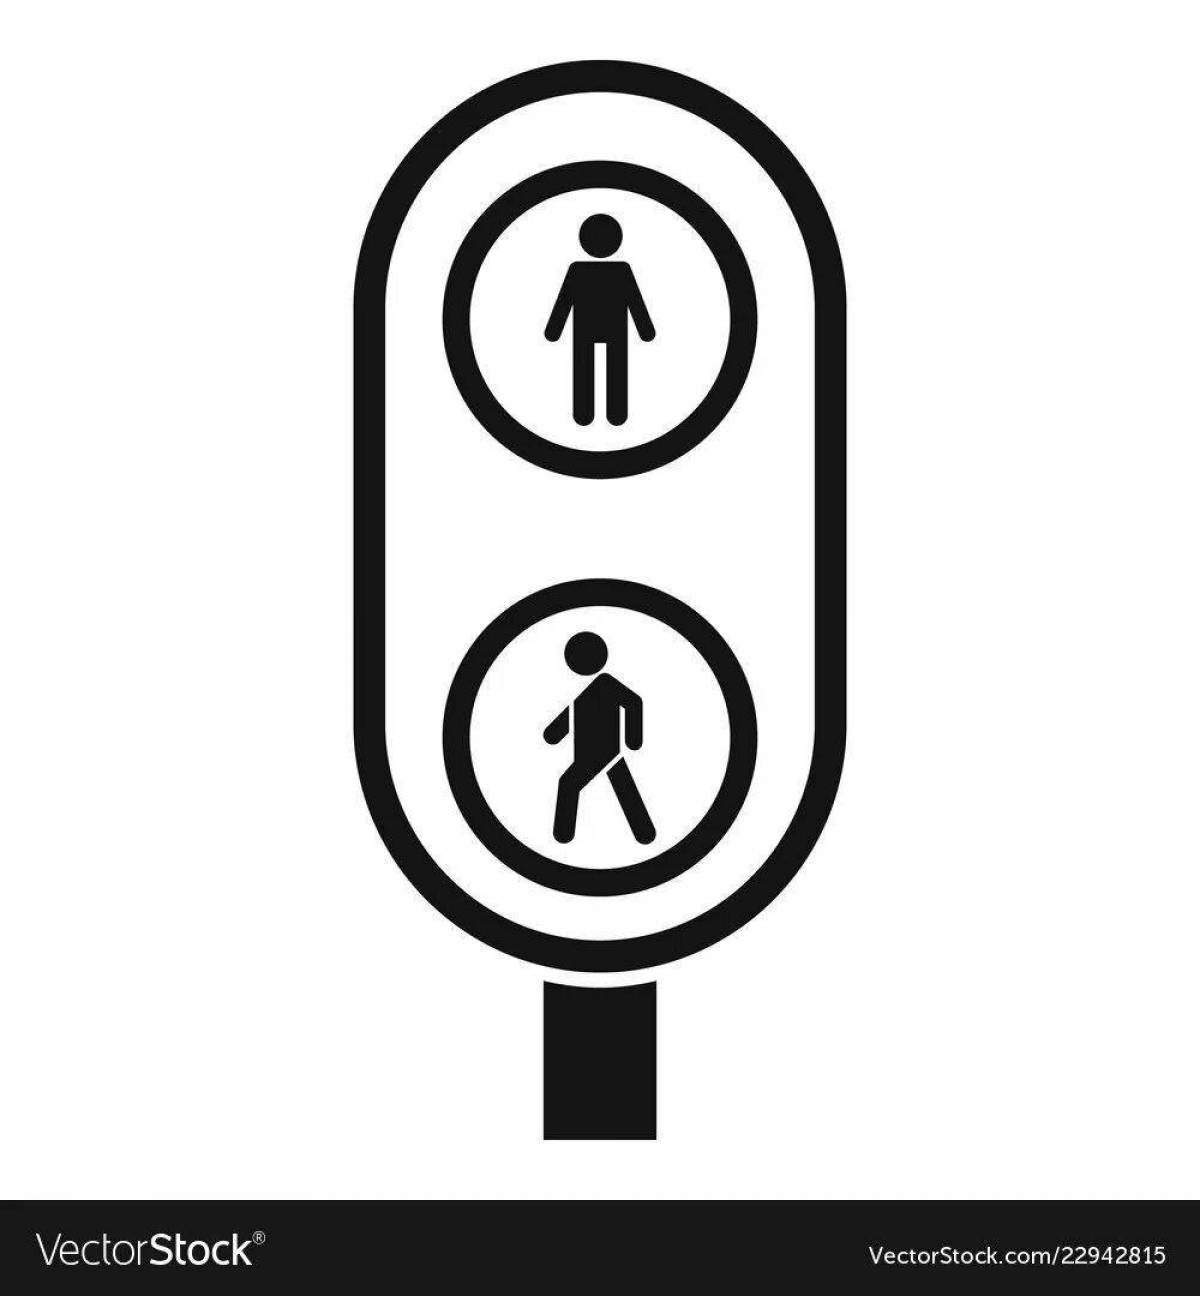 Bright traffic light for pedestrians